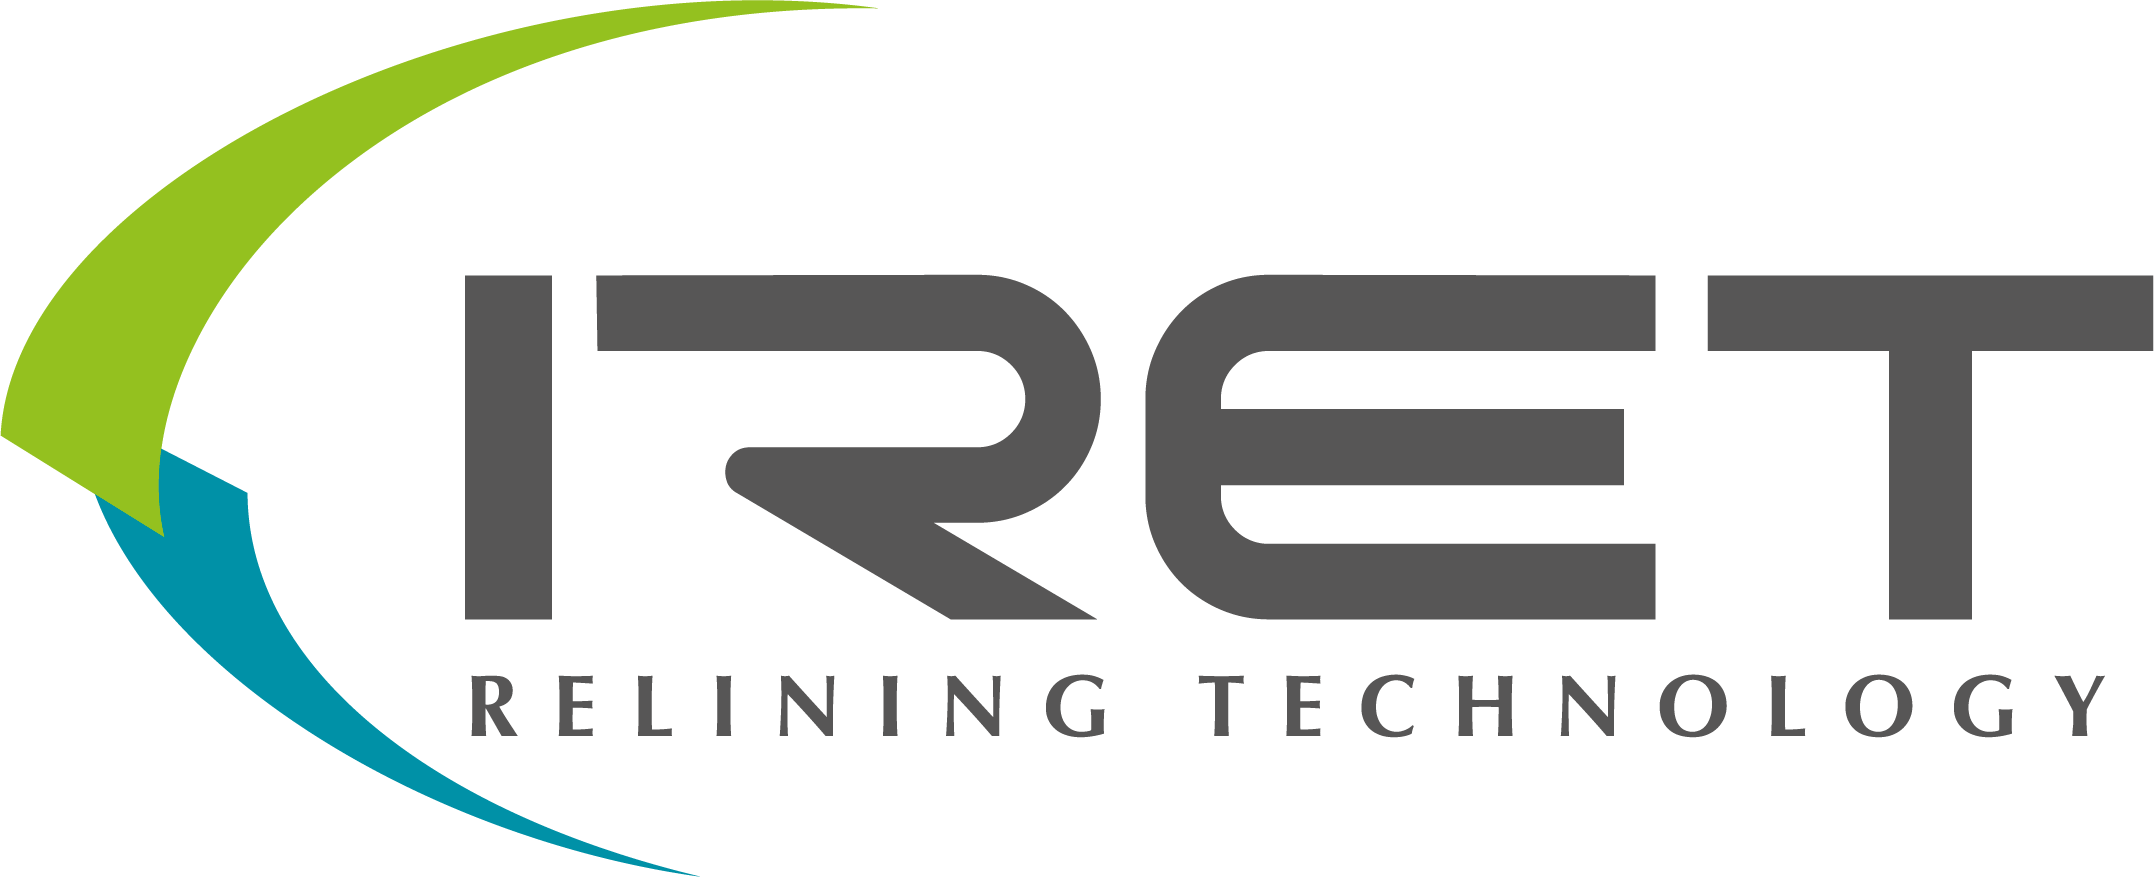 IRET - Relining Technology